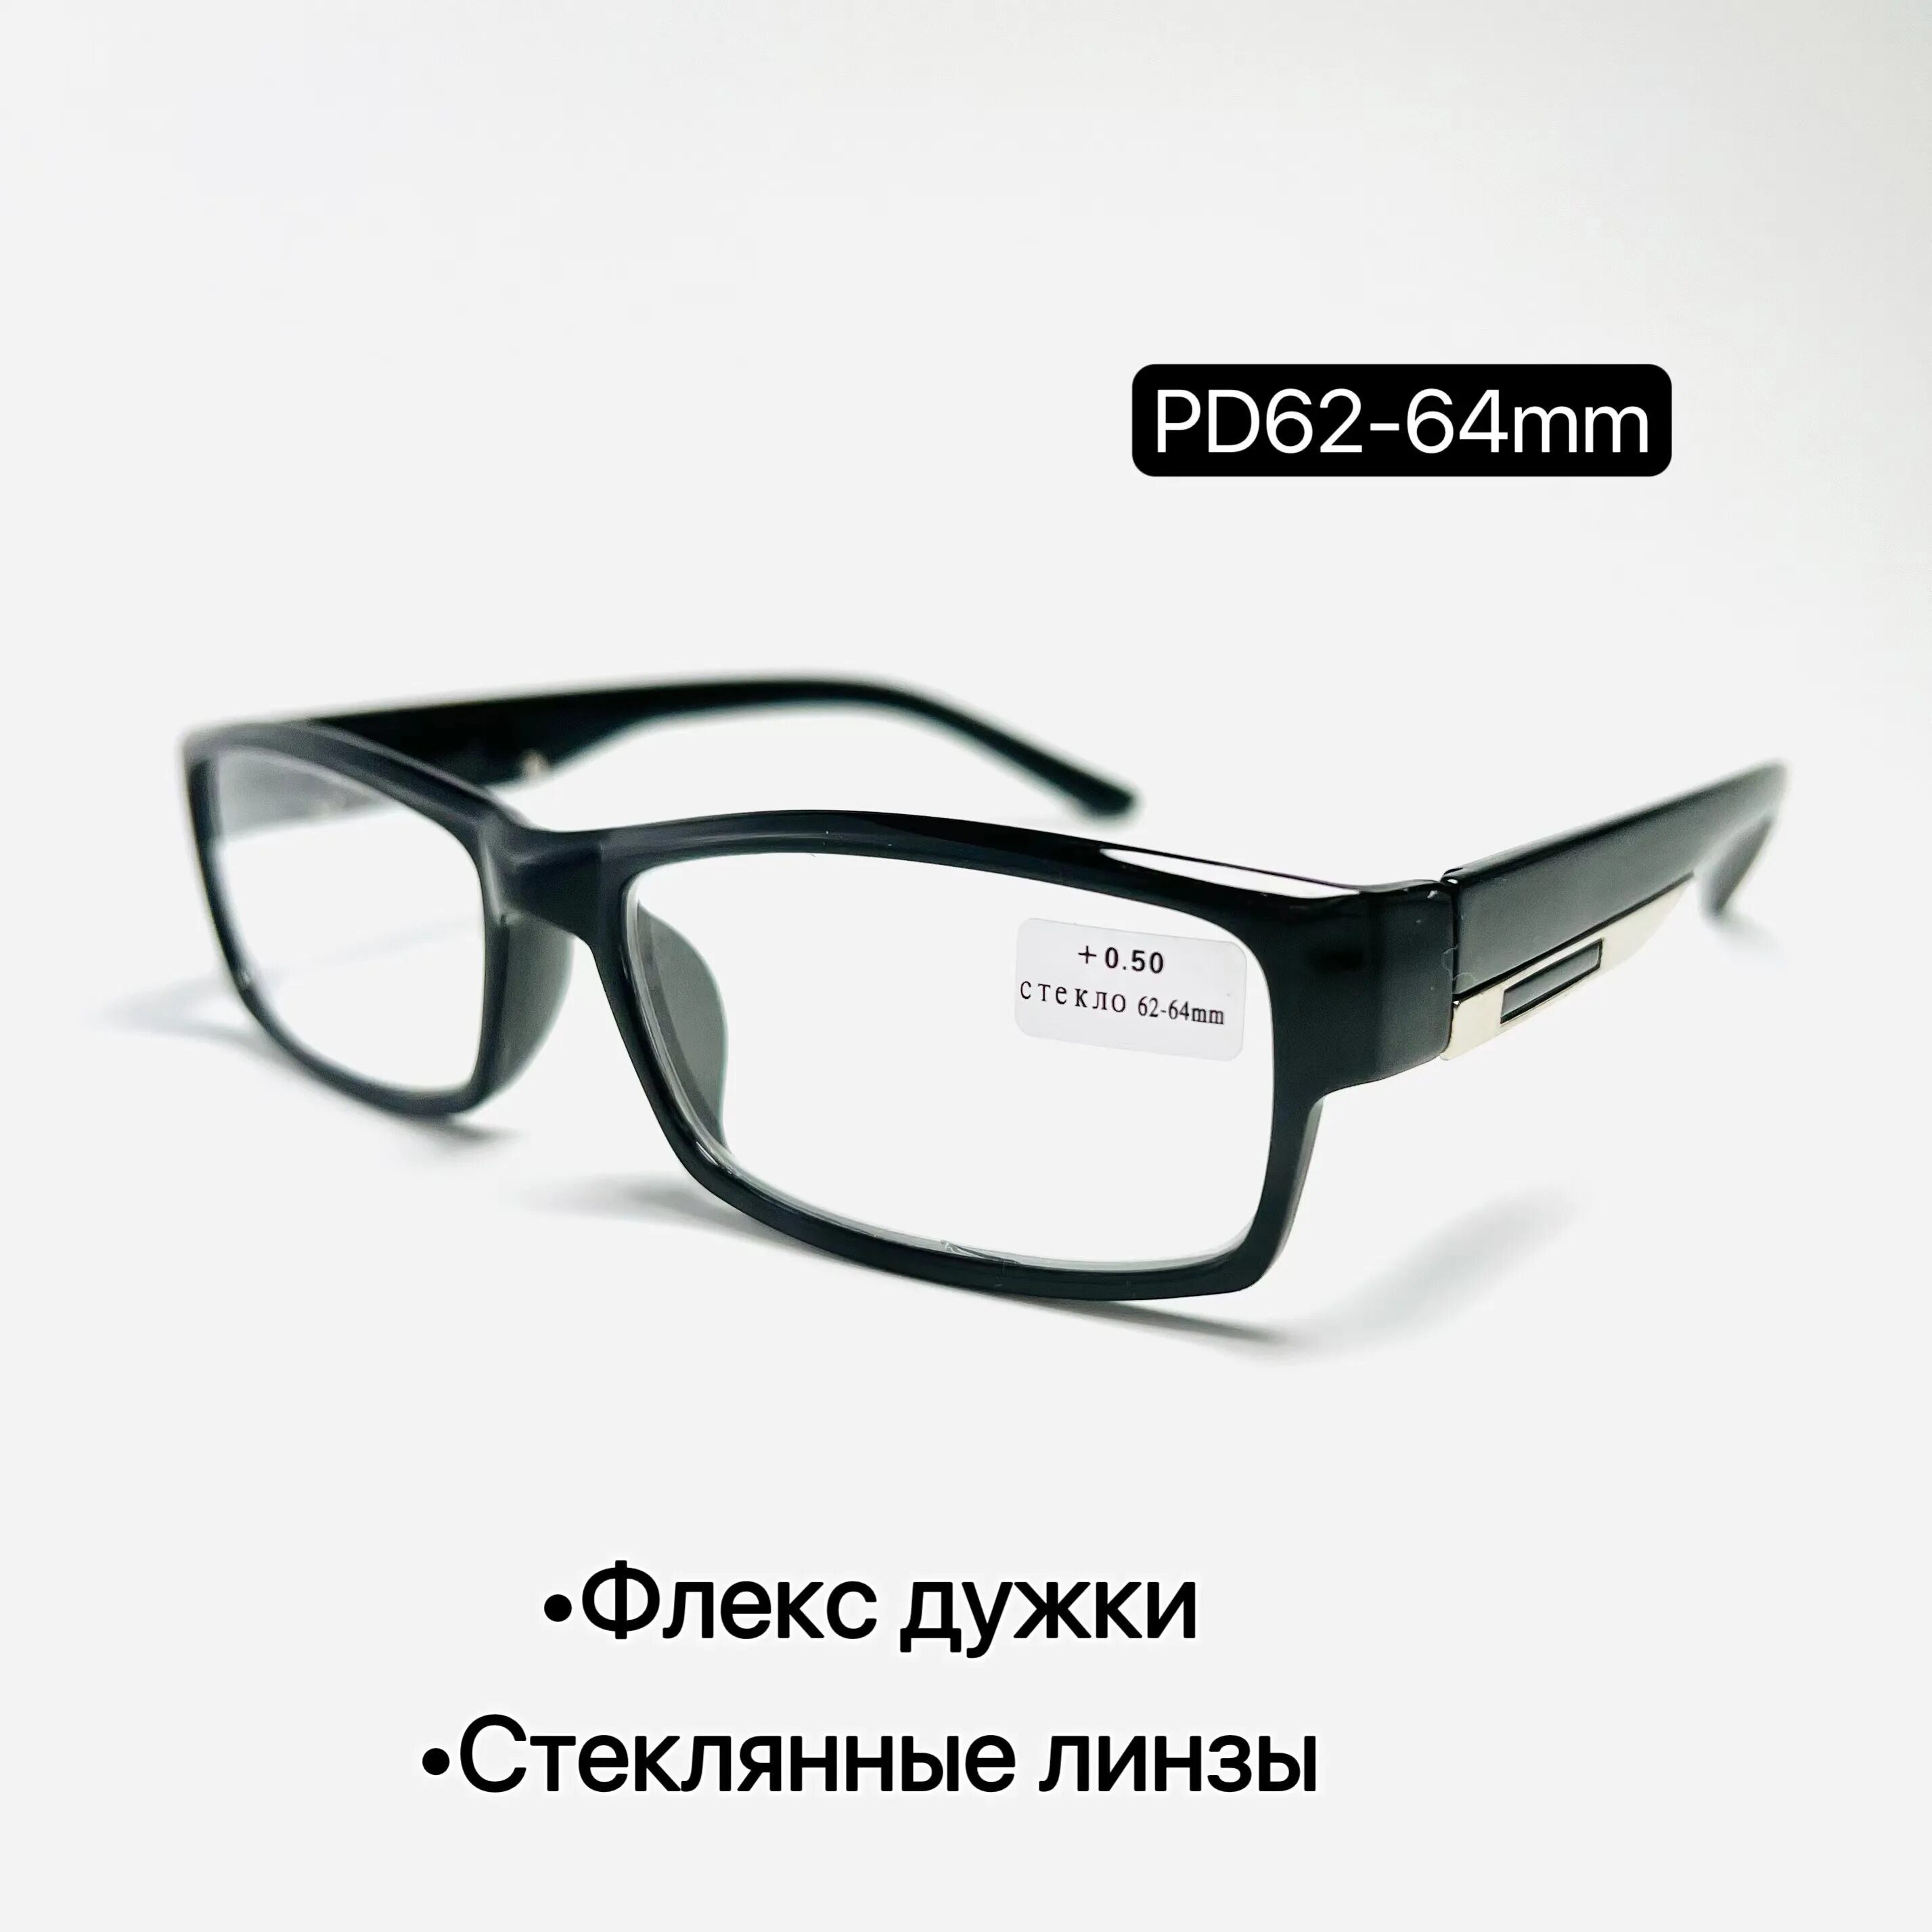 Очки PD 62-64 это. Дужки Флекс. Белые очки для флекса. Очки Флекс дужками для компьютера. Флекс дужками